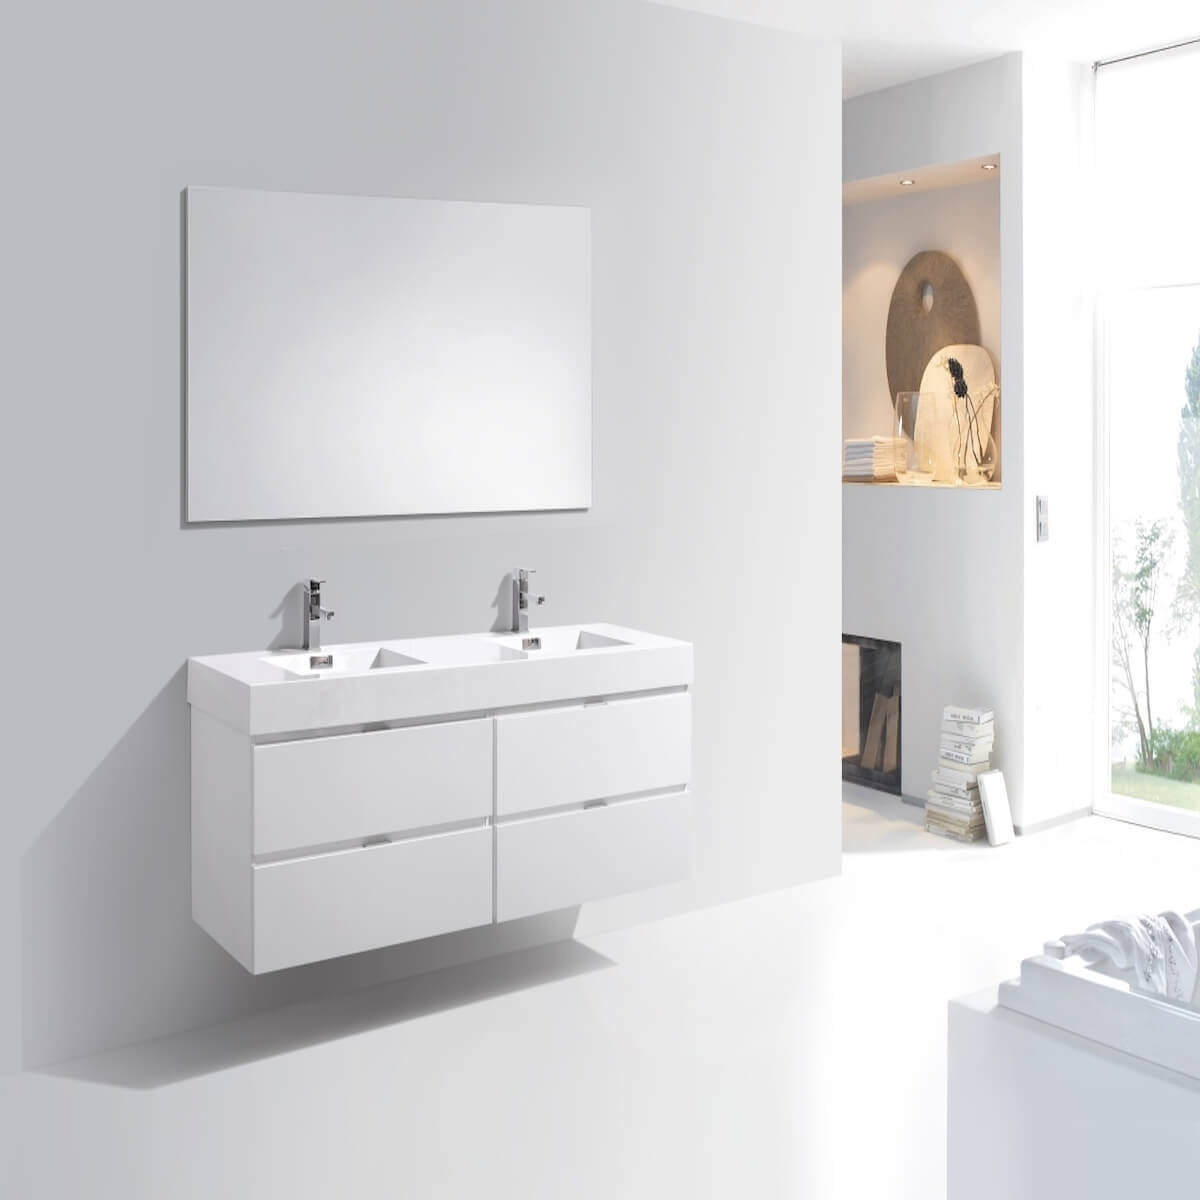 KubeBath Bliss 72" Gloss White Wall Mount Double Vanity BSL72-GW in Bathroom #finish_gloss white